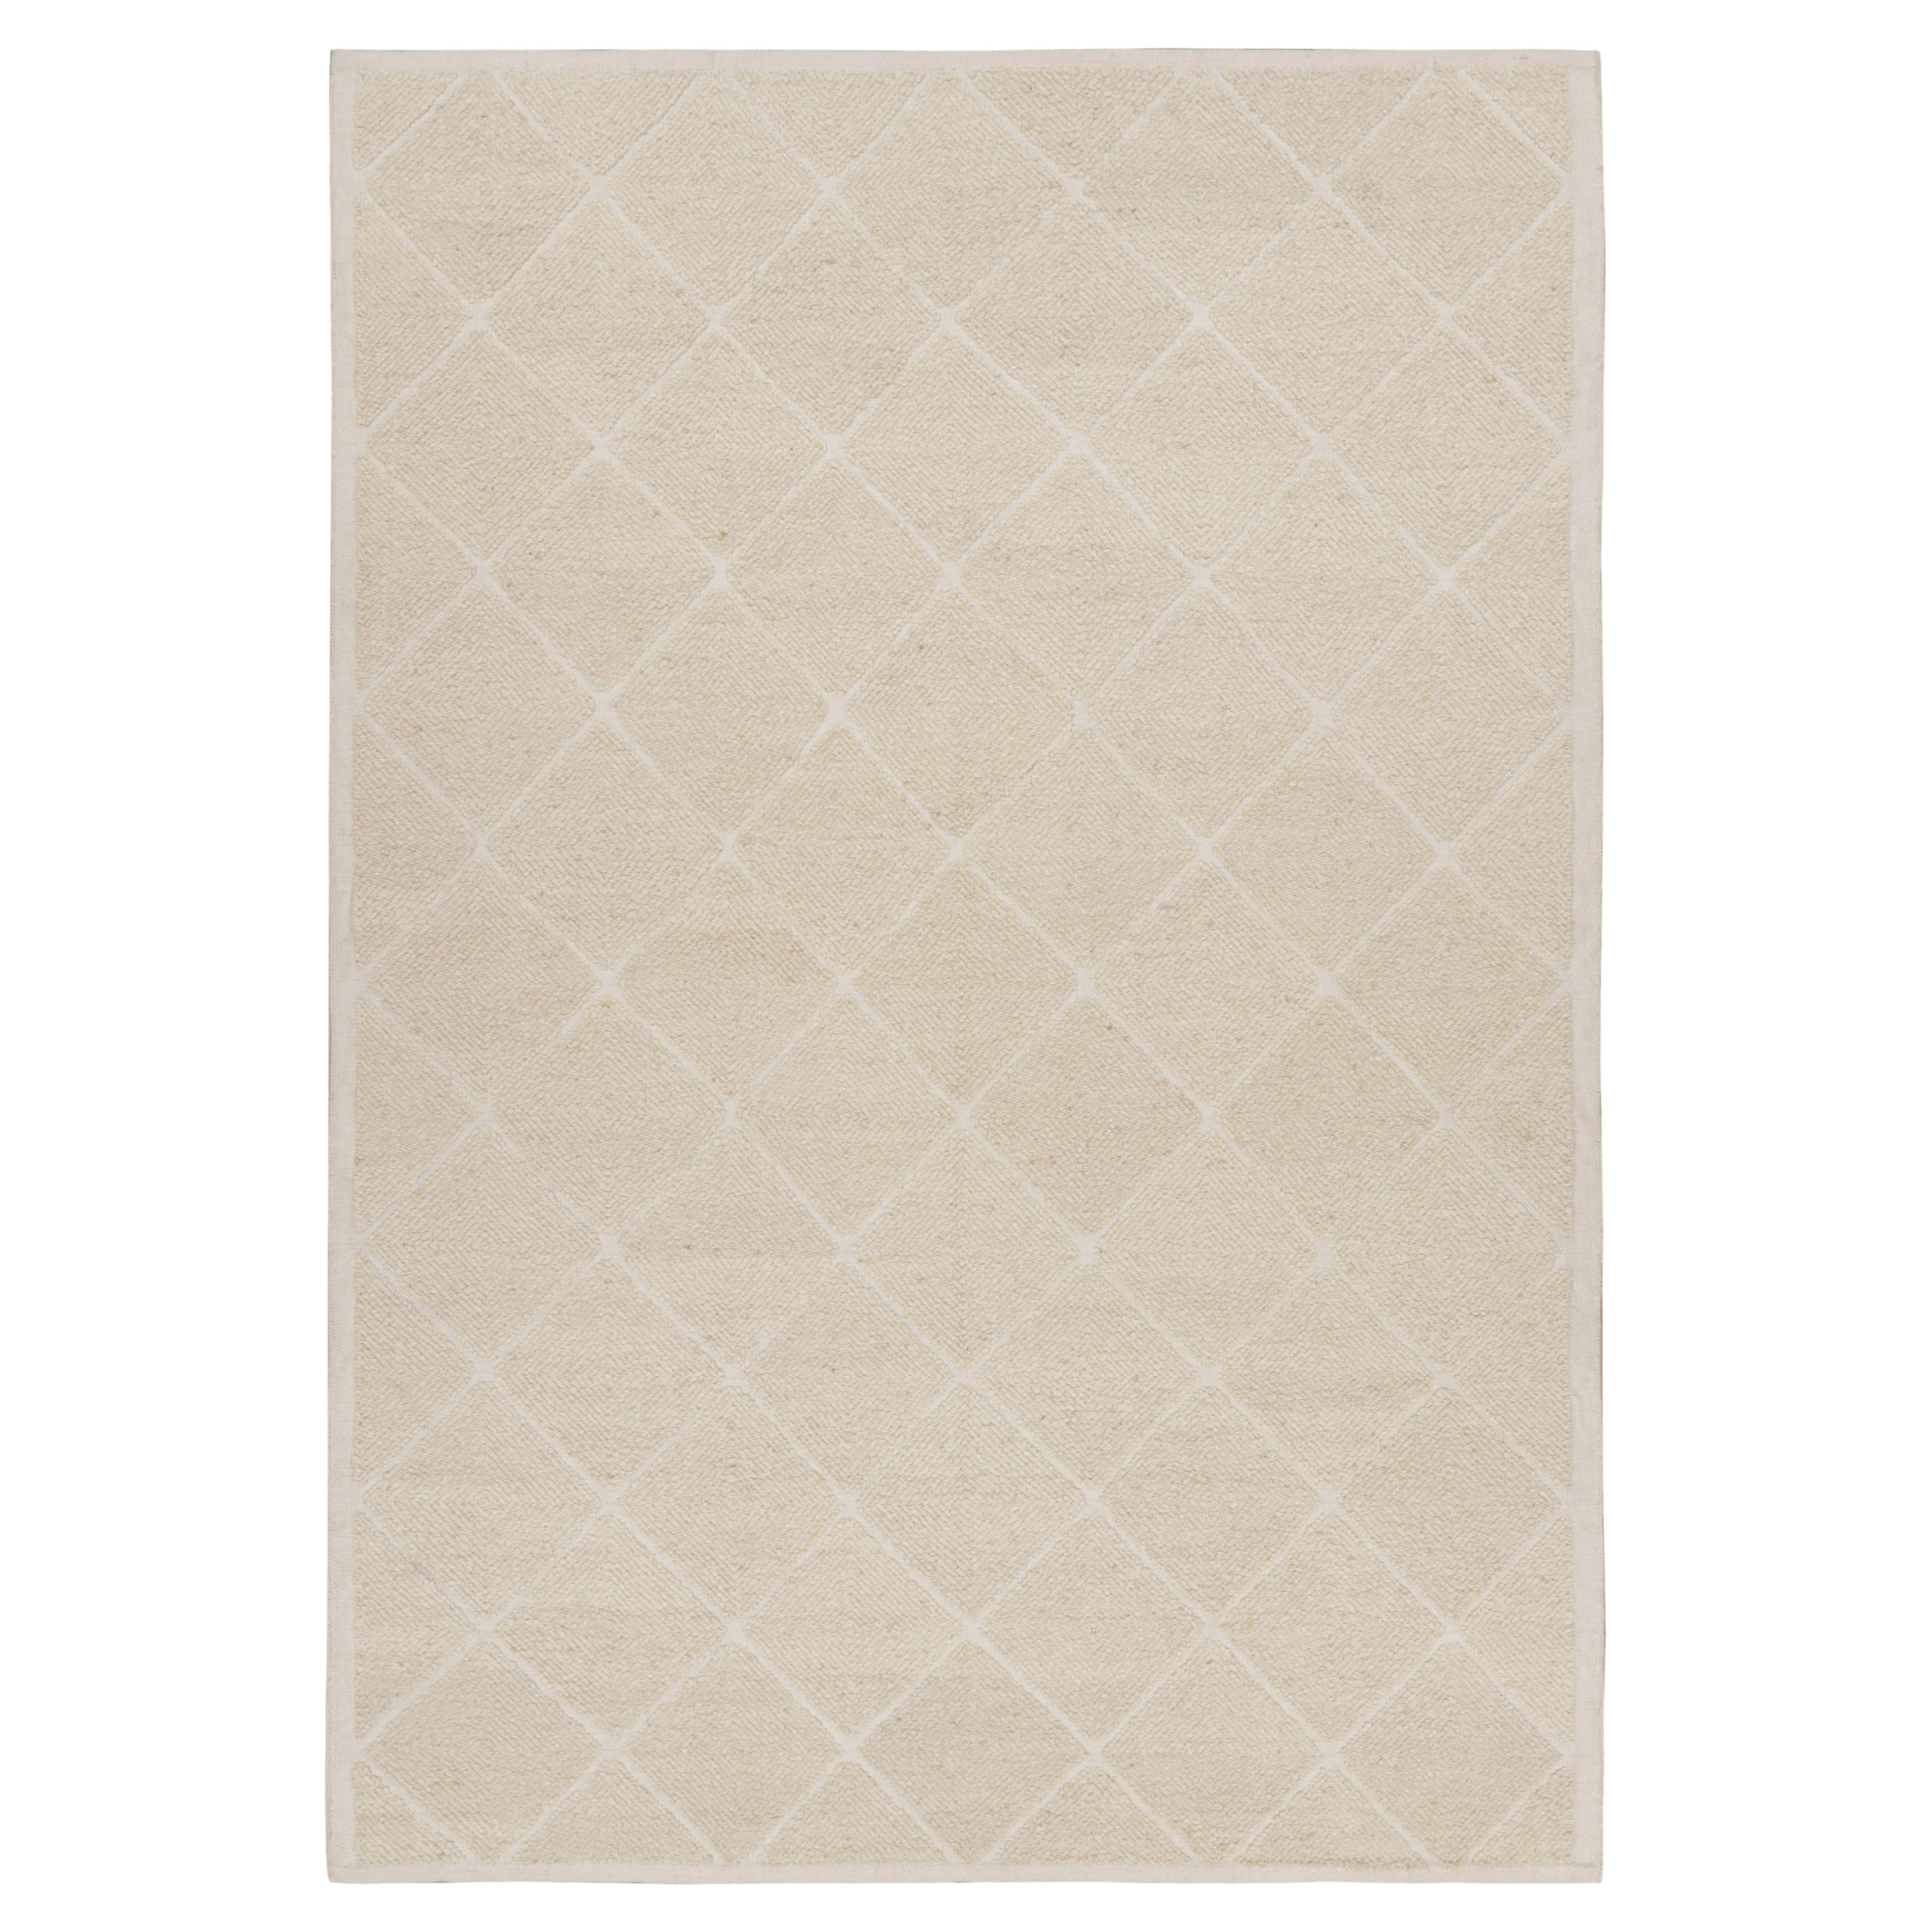 Rug & Kilim’s Scandinavian Style Rug in White with Diamond Lattice Patterns